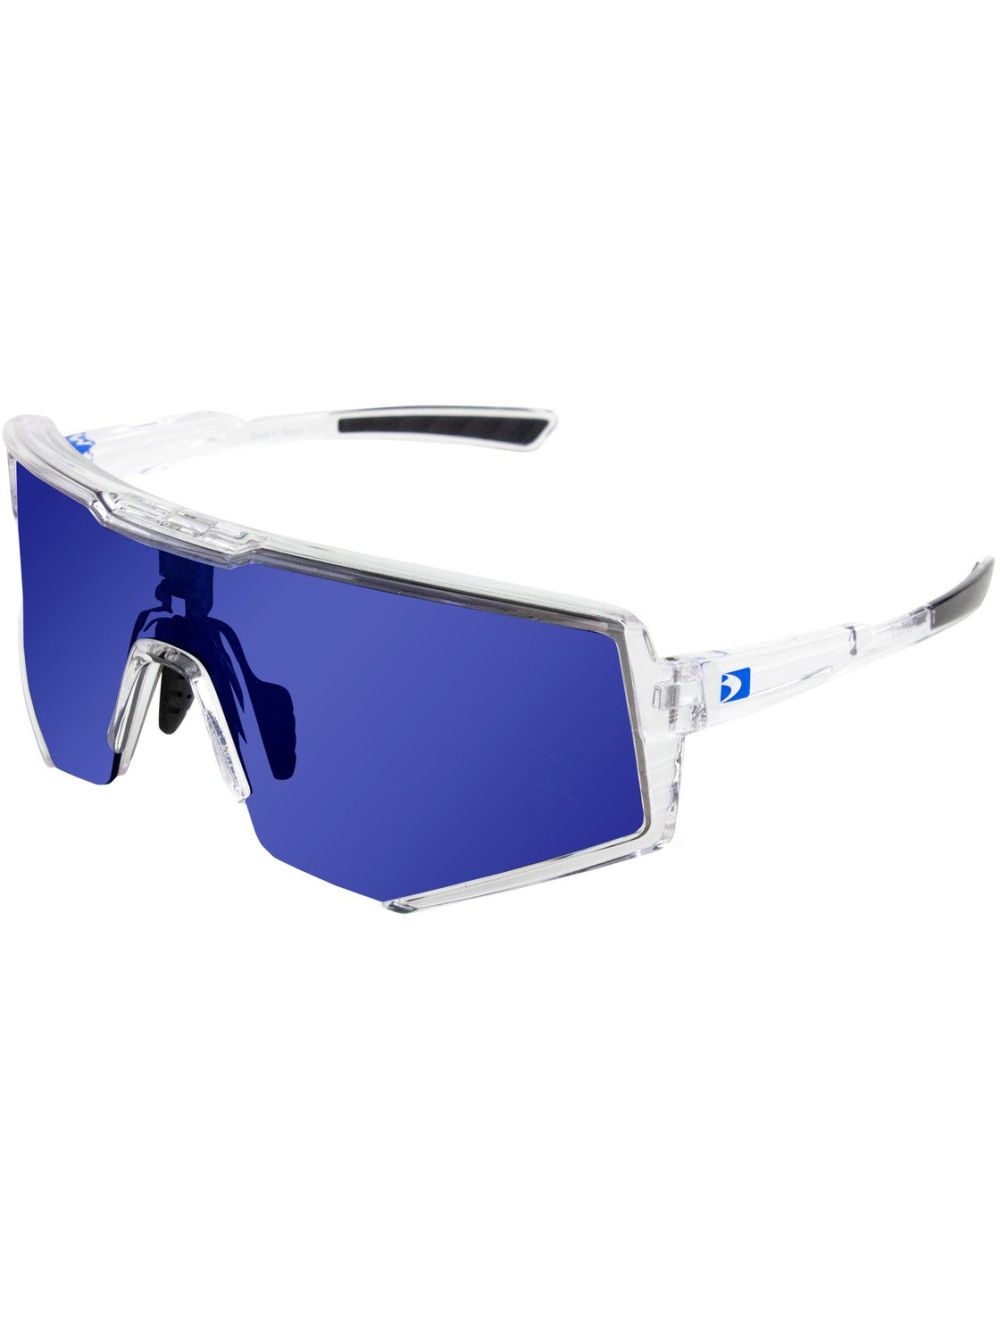 Sprocket Sunglasses - Crystal Clear Frame w/ Blue Mirror Lens